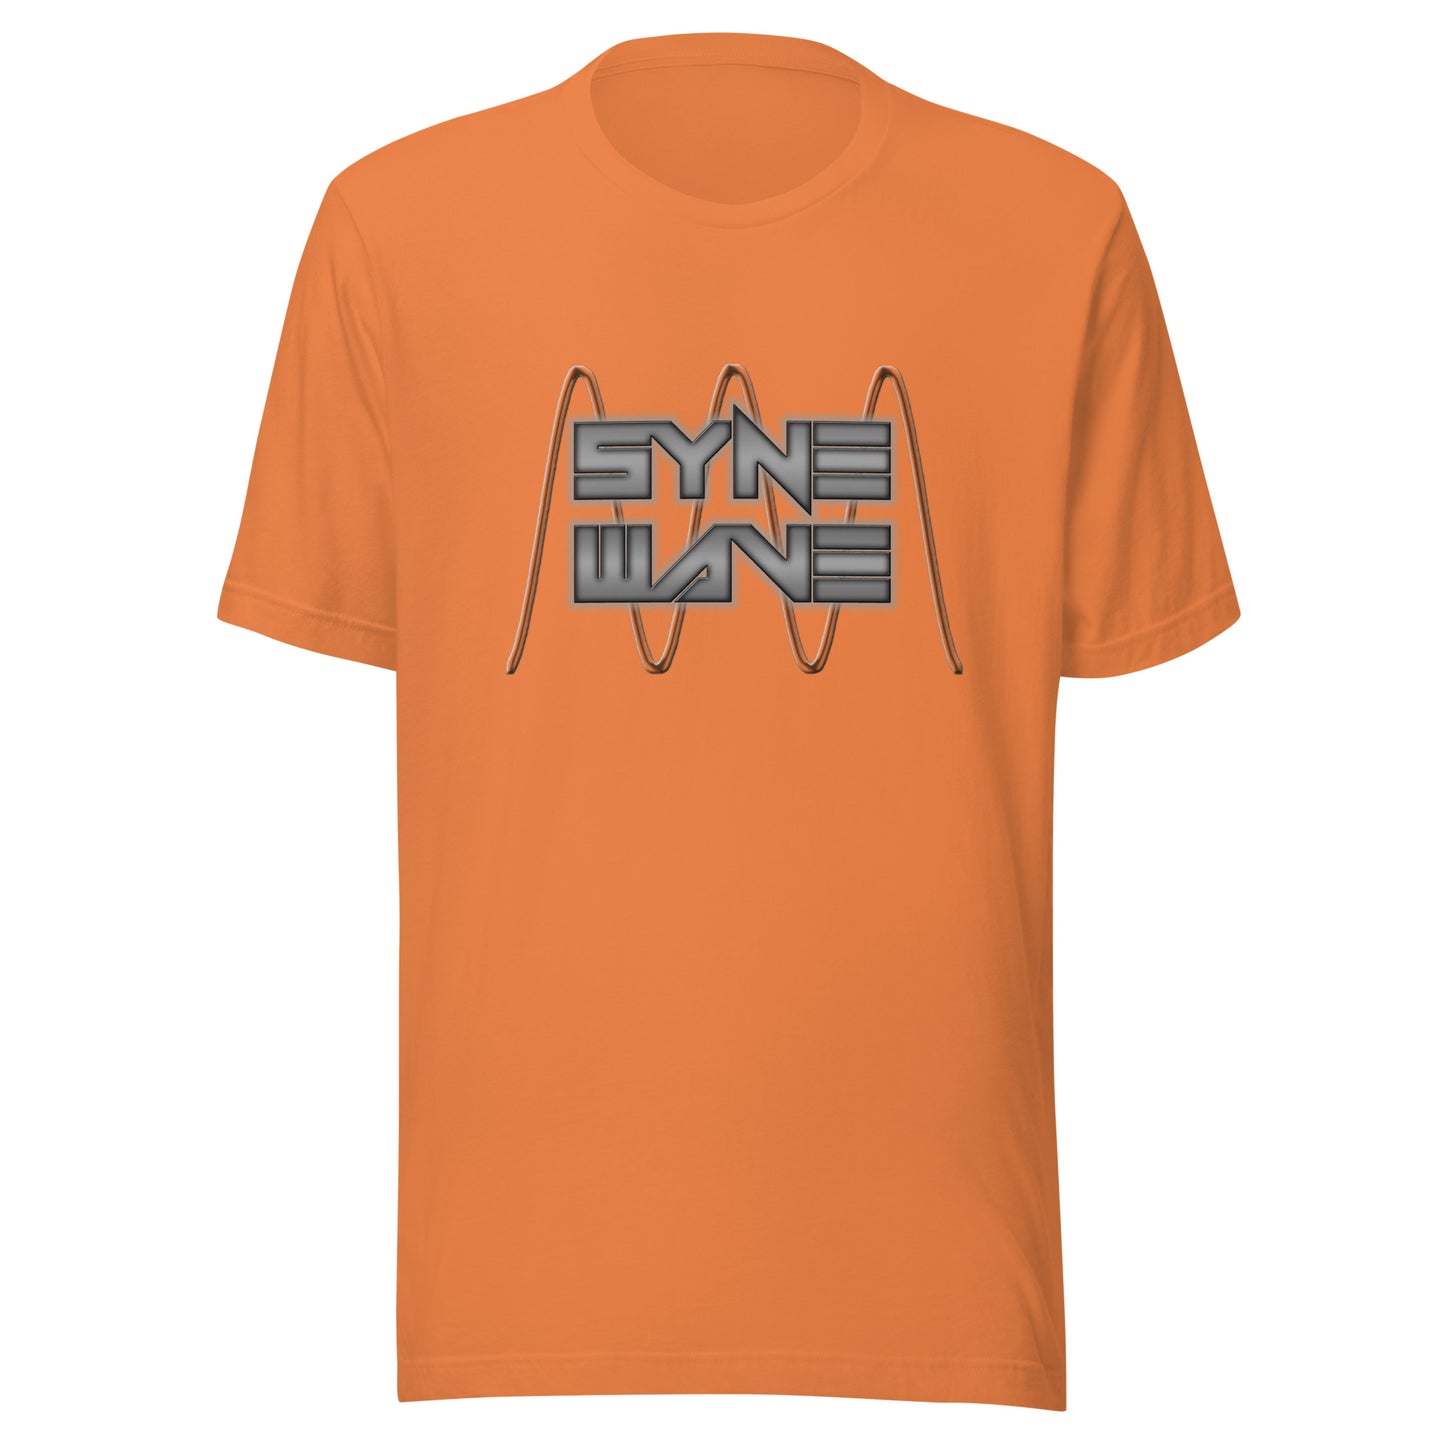 Syne Wave B+W Logo T-Shirt